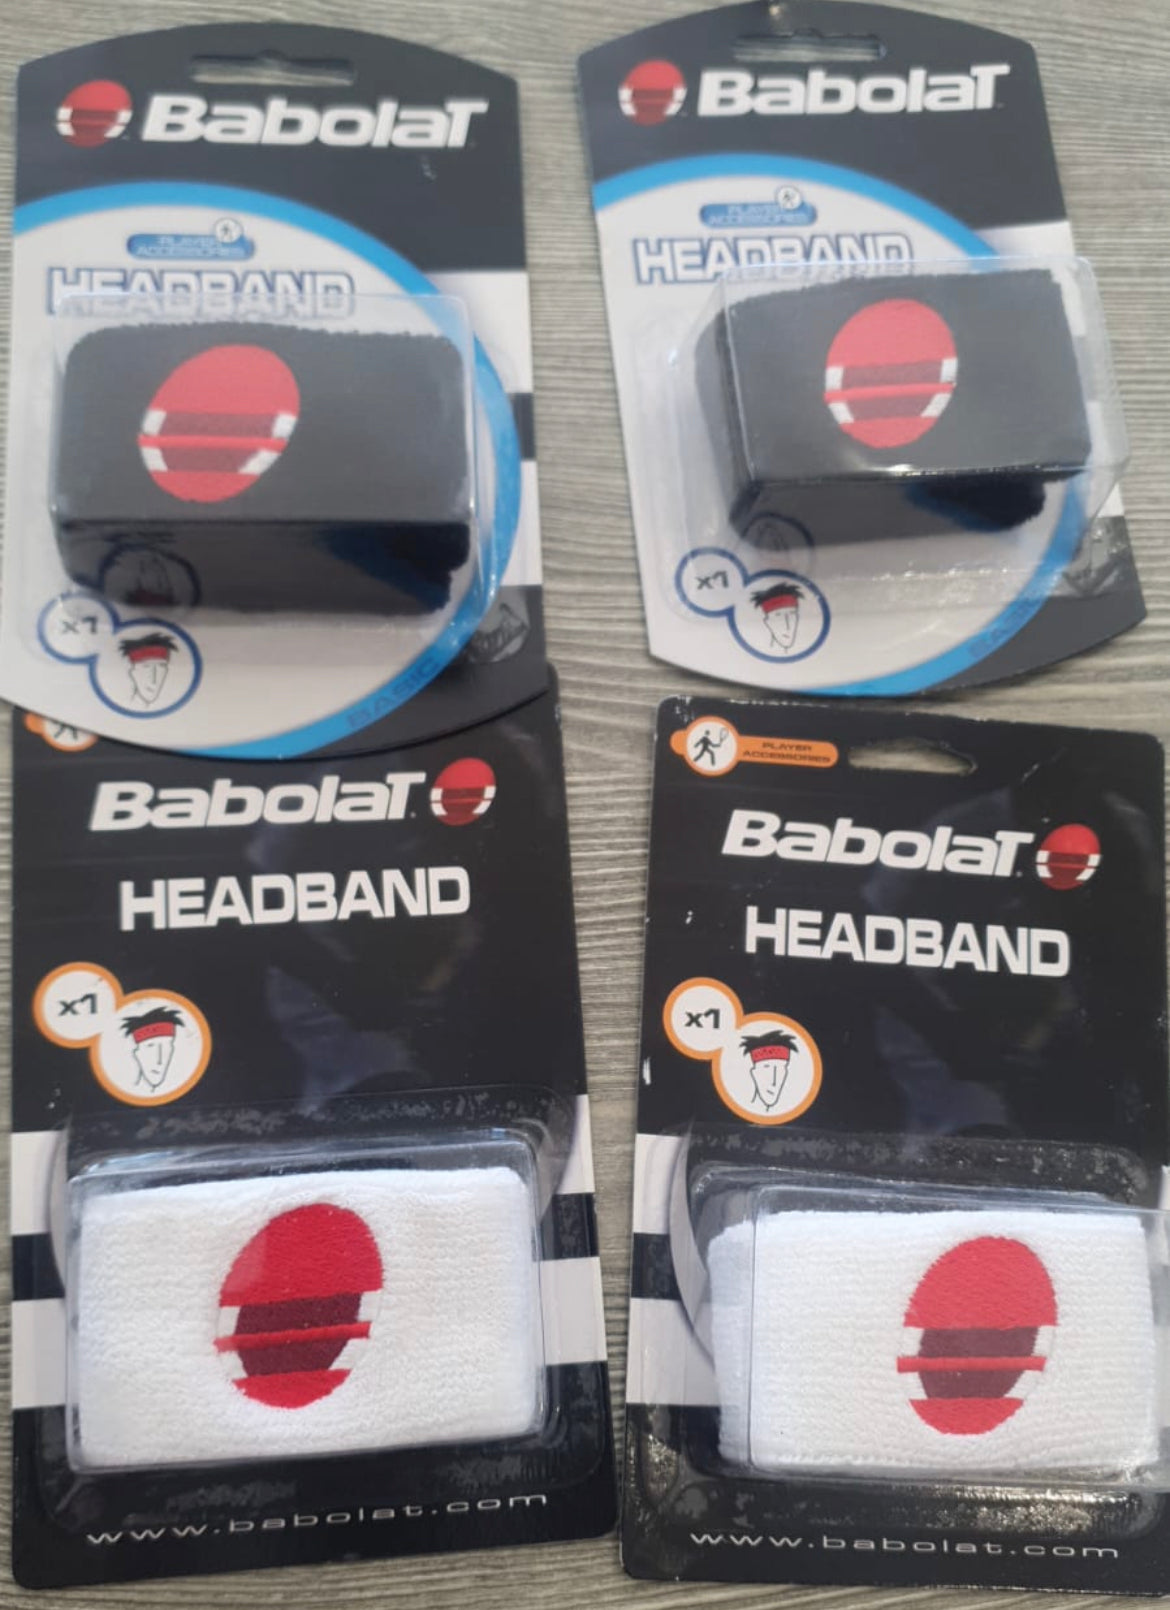 Babolat Headband in Black or White